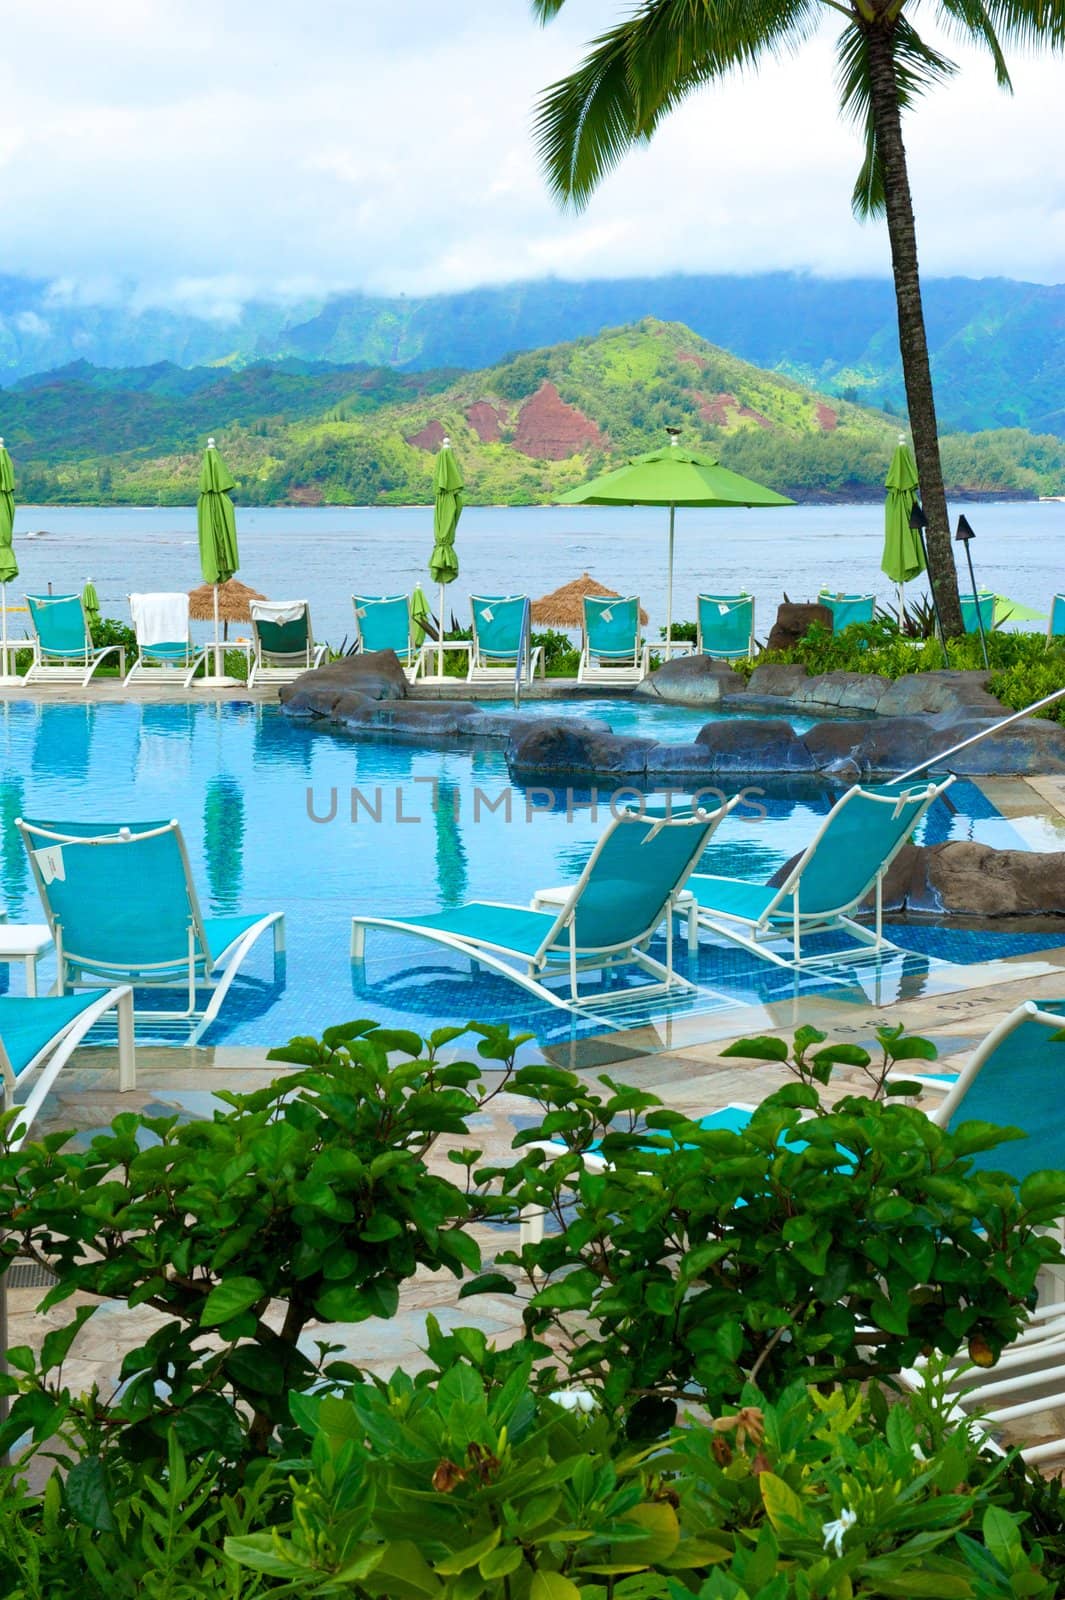 A beautiful pool at a resort along the coastline of the Island of Kauai in Hawaii